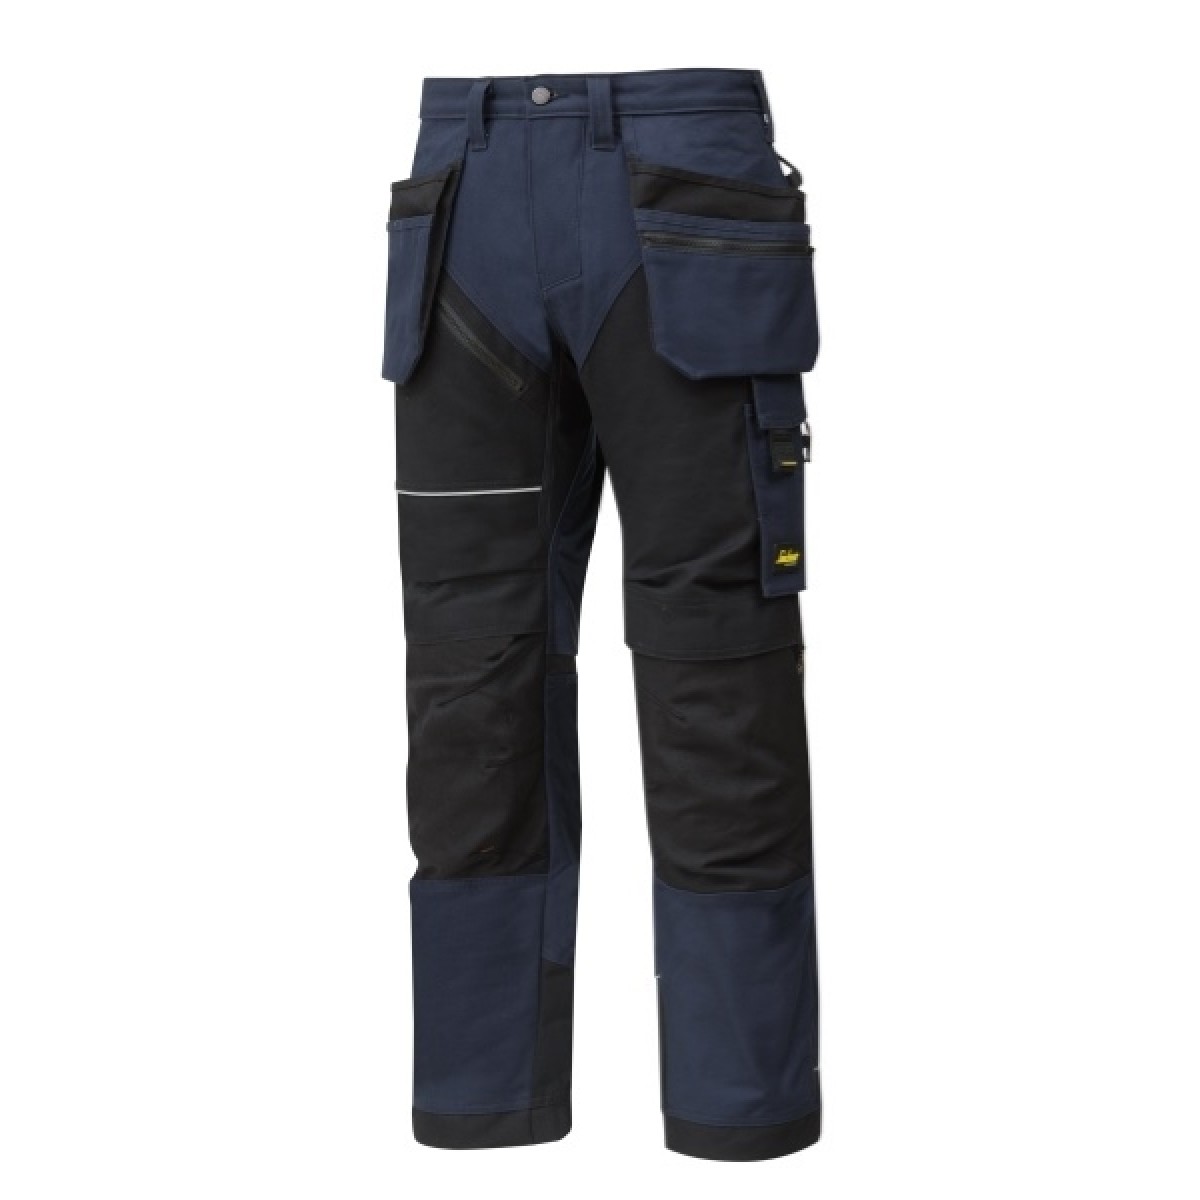 Pantalon de travail en coton avec poches holster+, RuffWork SNICKERS 6215